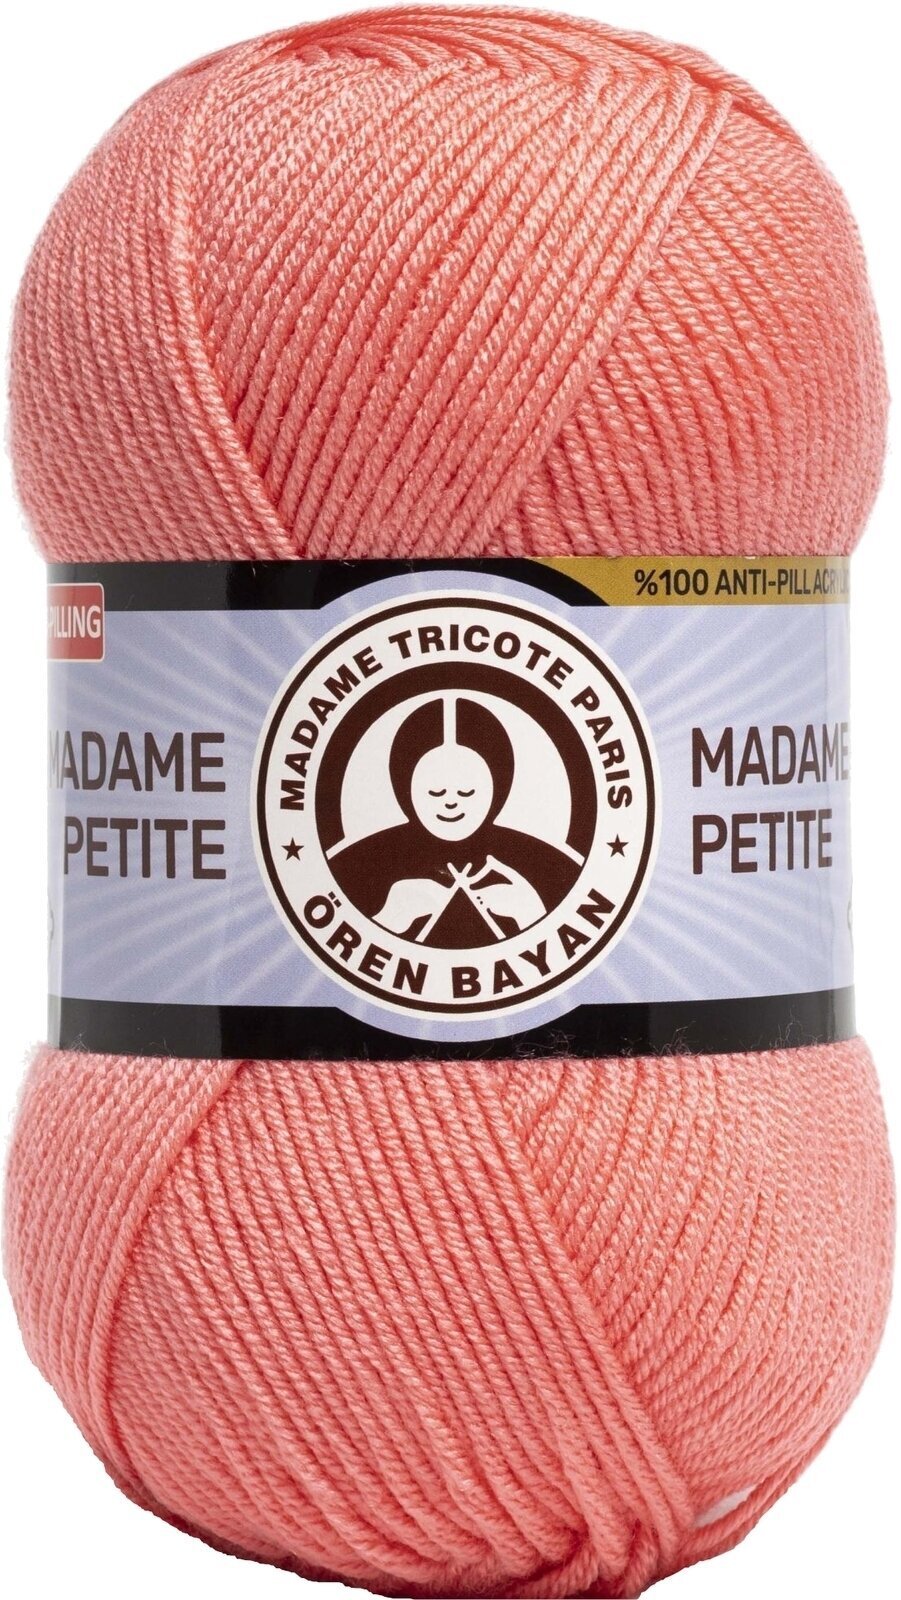 Strickgarn Madame Tricote Paris Madame Petite 3848 36 Strickgarn